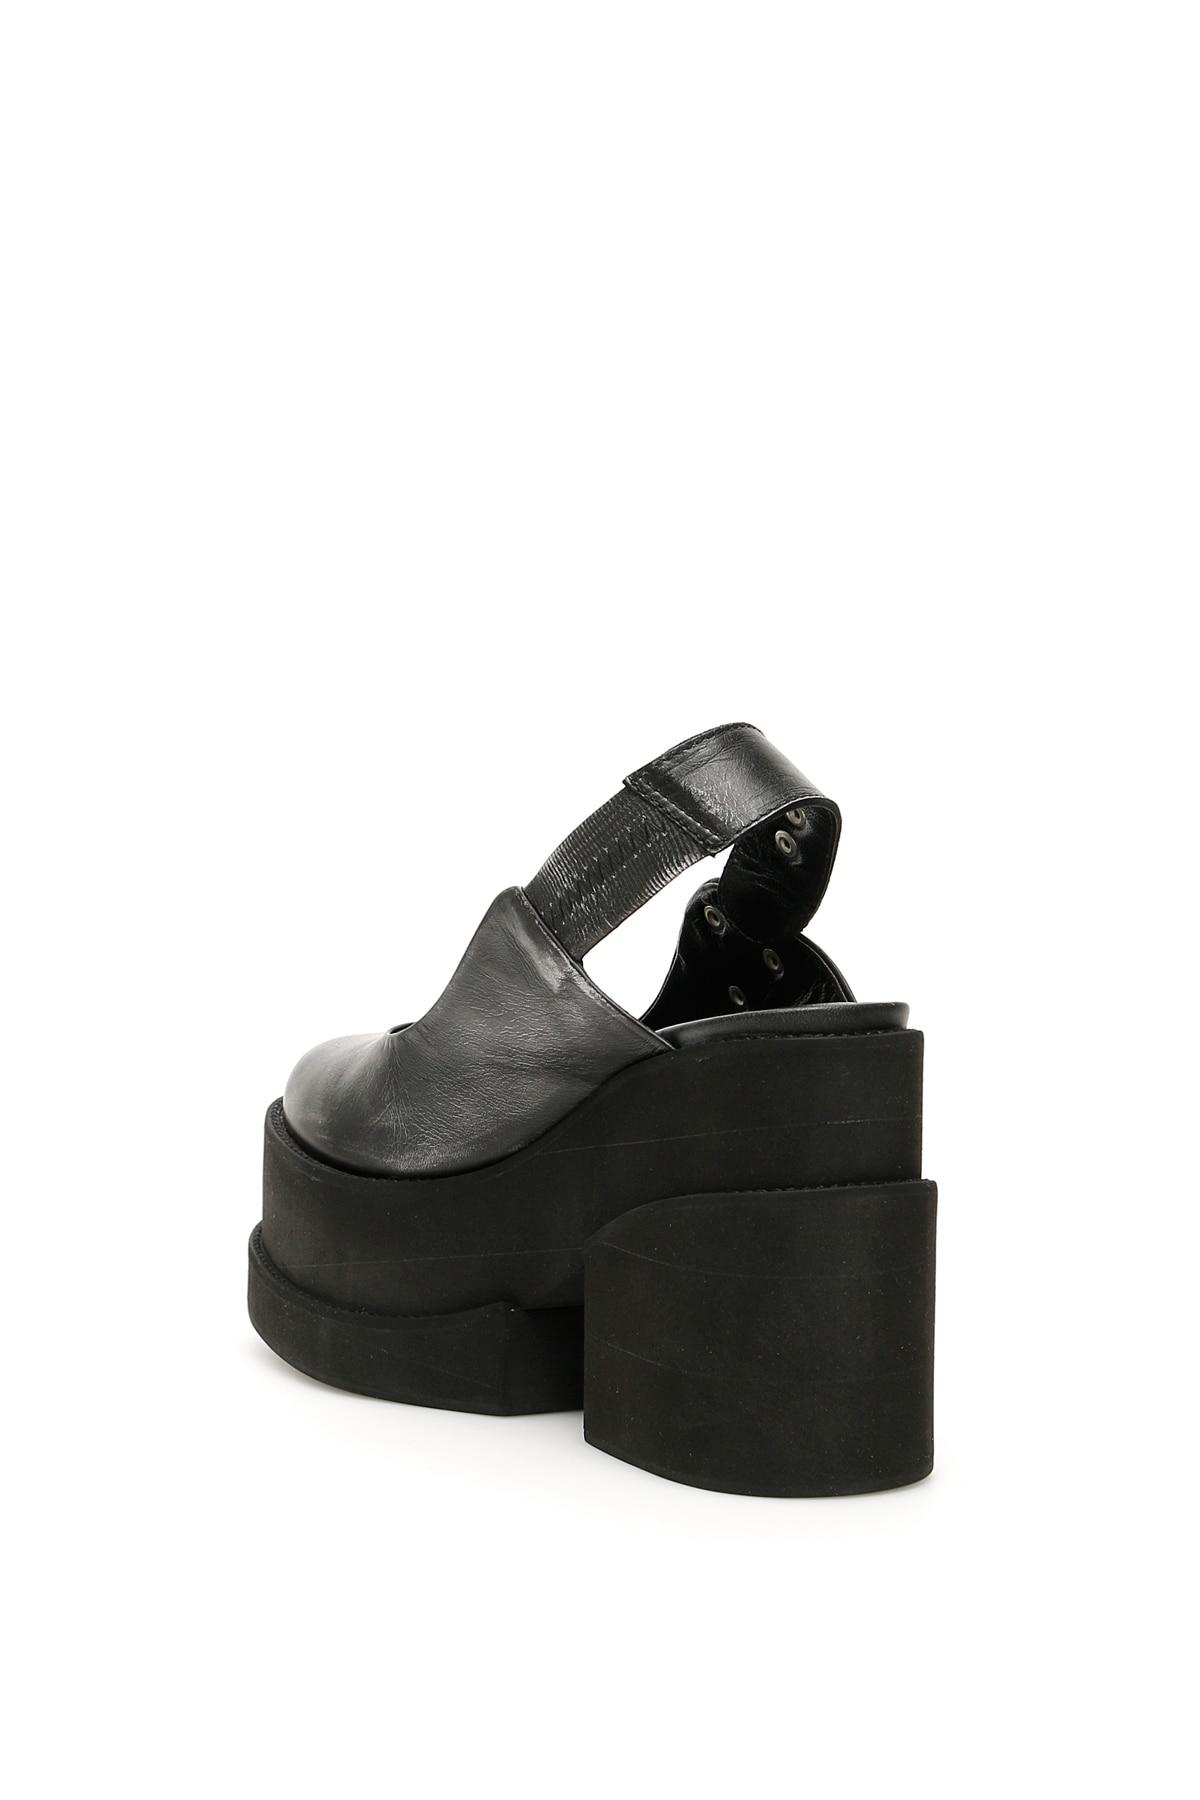 Ganni Leather Slingback Wedges in Grey,Black (Black) - Lyst